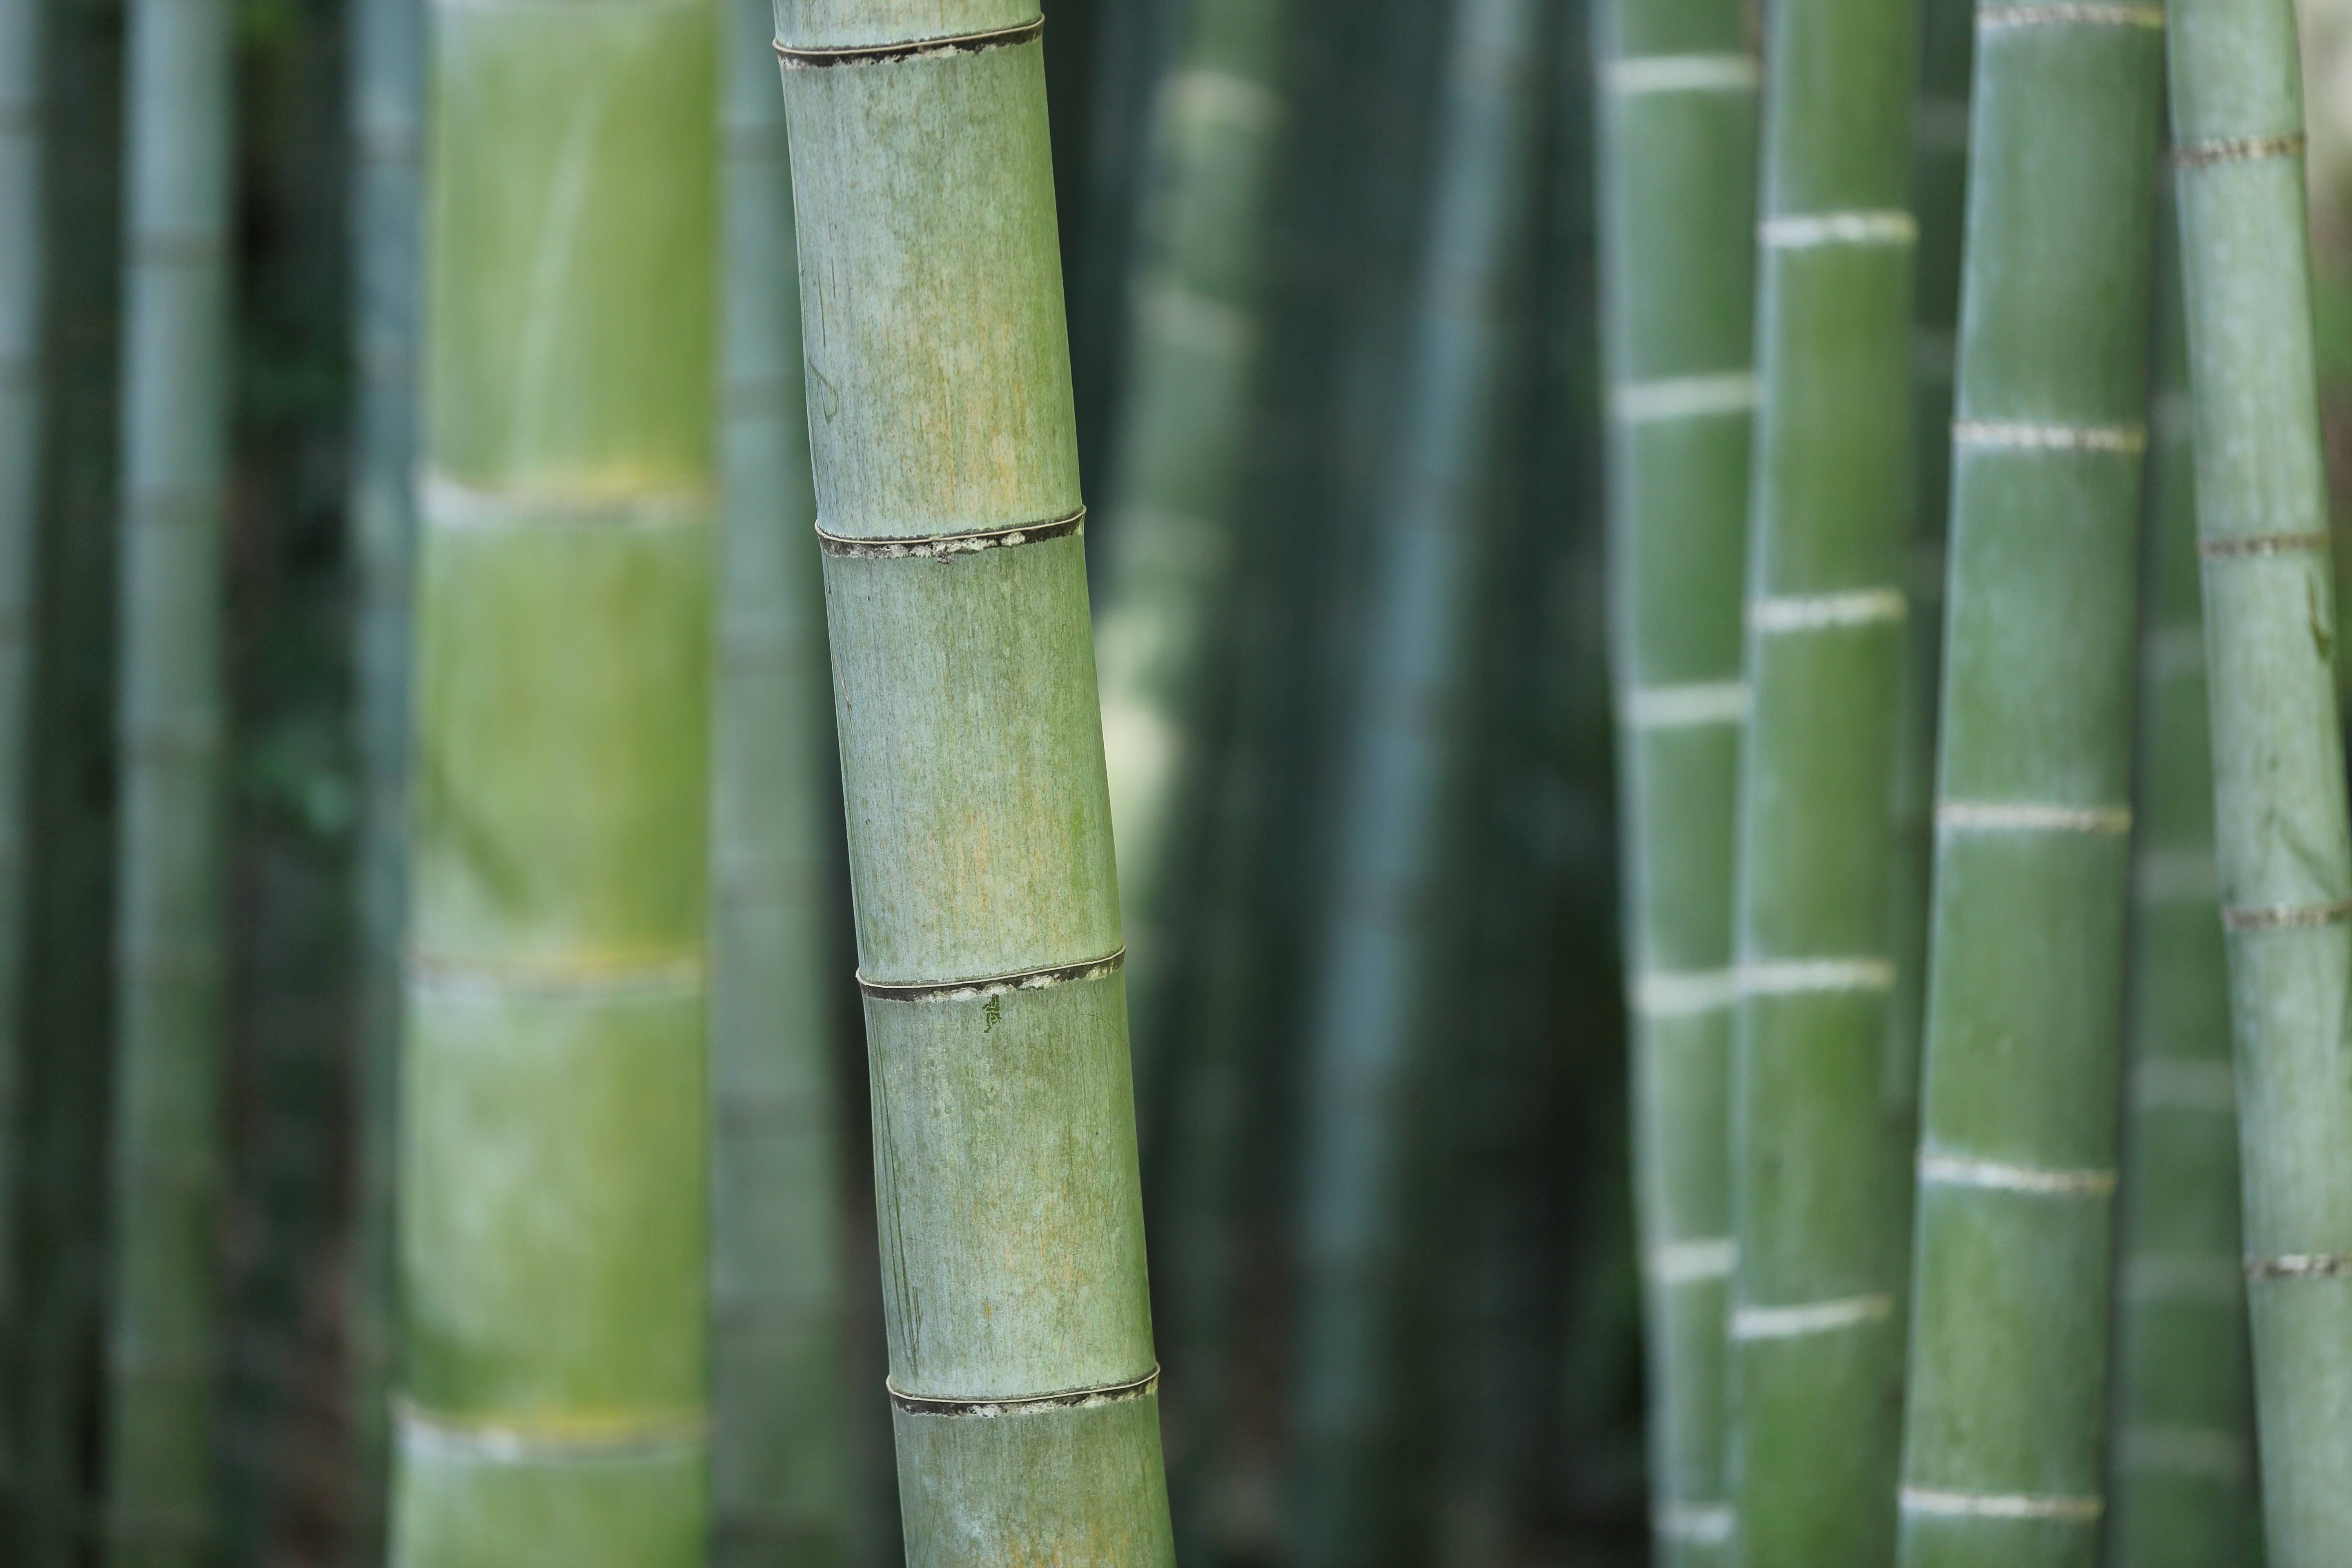 Bamboo plants - used in the production Nightire sleepwear